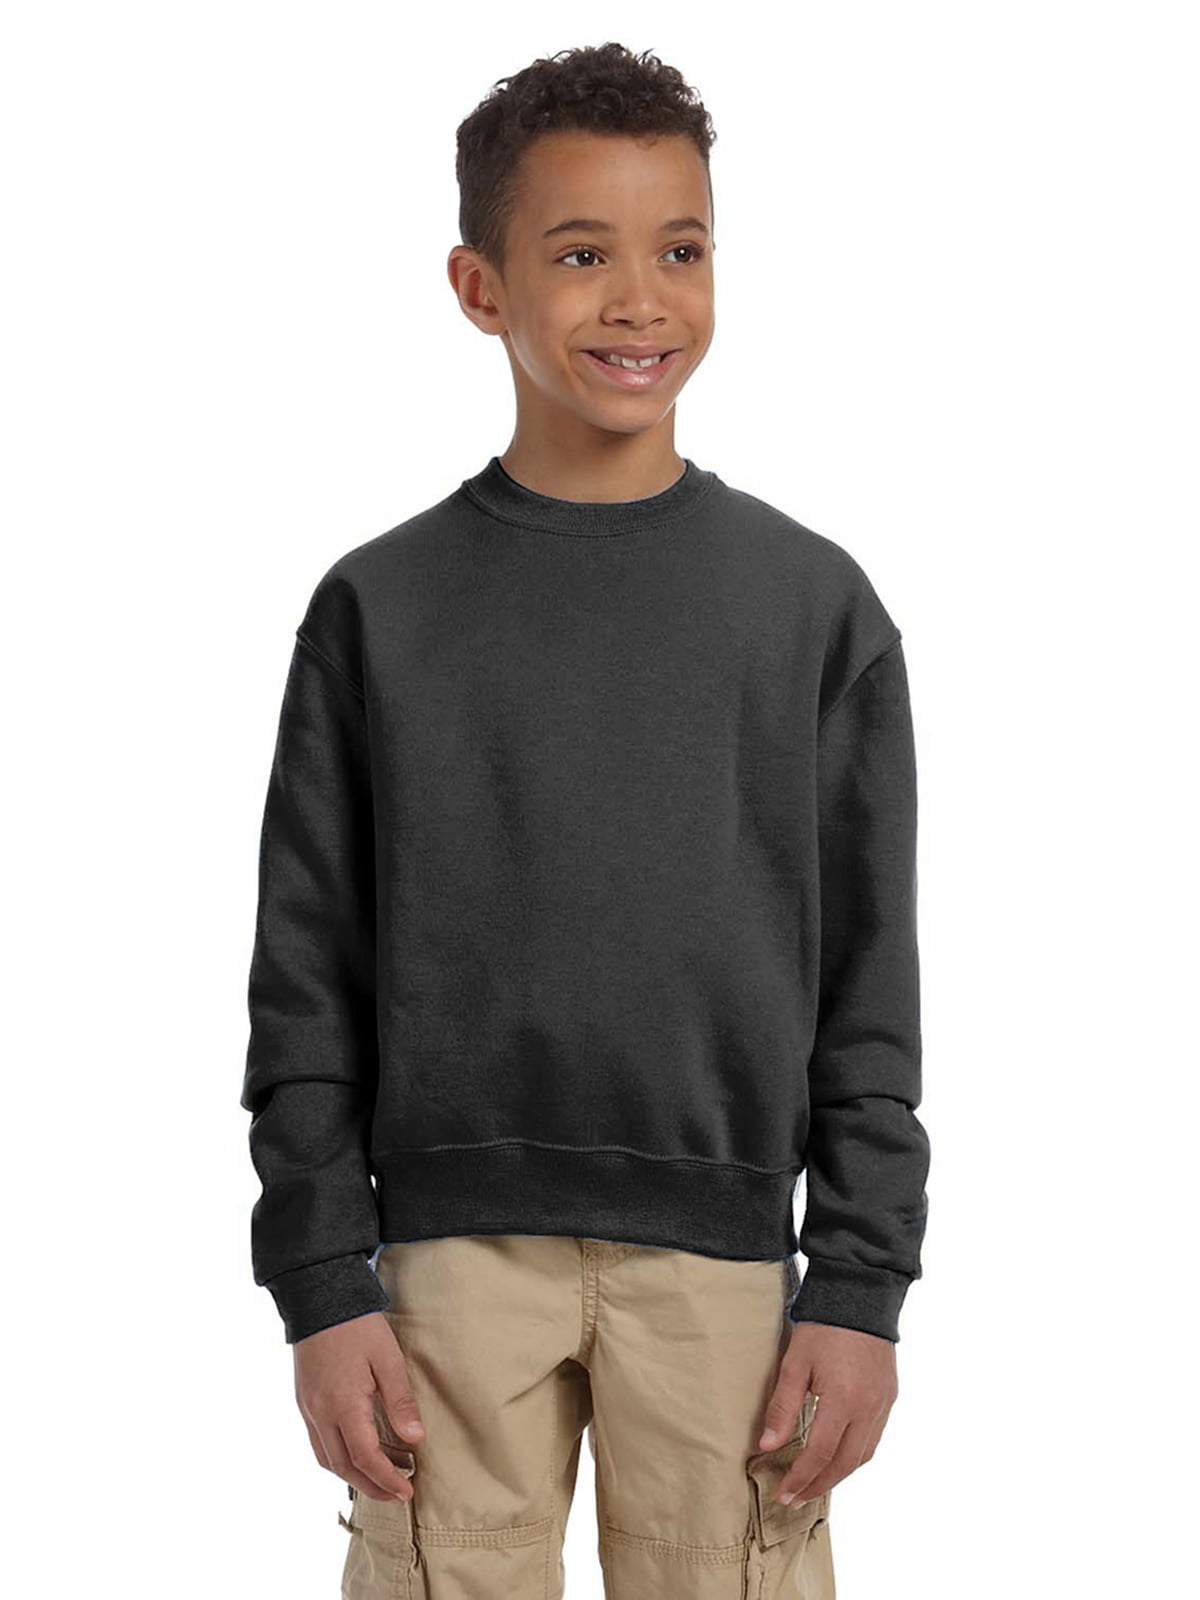 Kids Children Unisex School Uniform Plain Fleece Sweat Jumper Pullover 